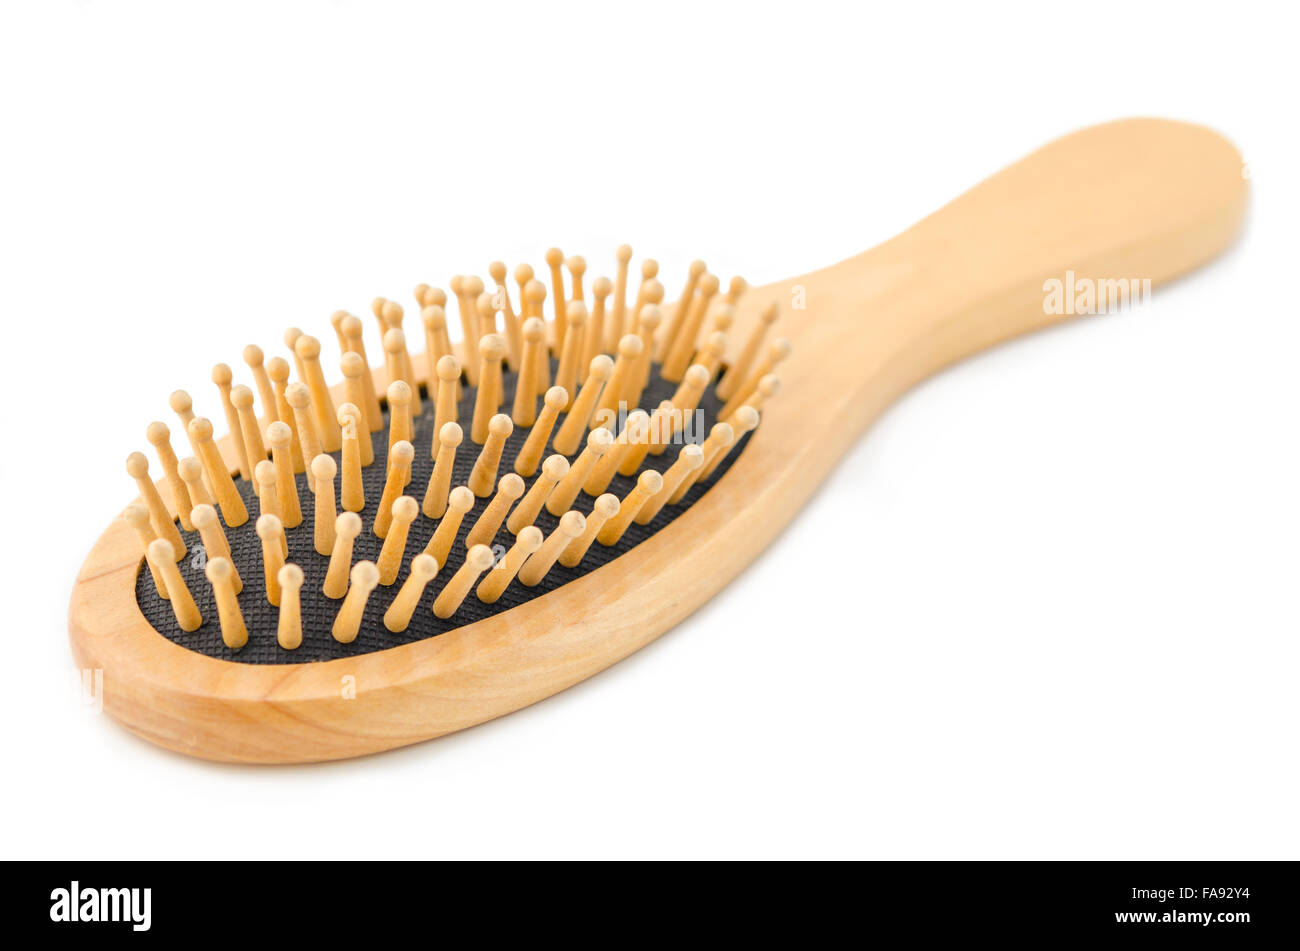 Wooden hair brush isolated on white background. Stock Photo